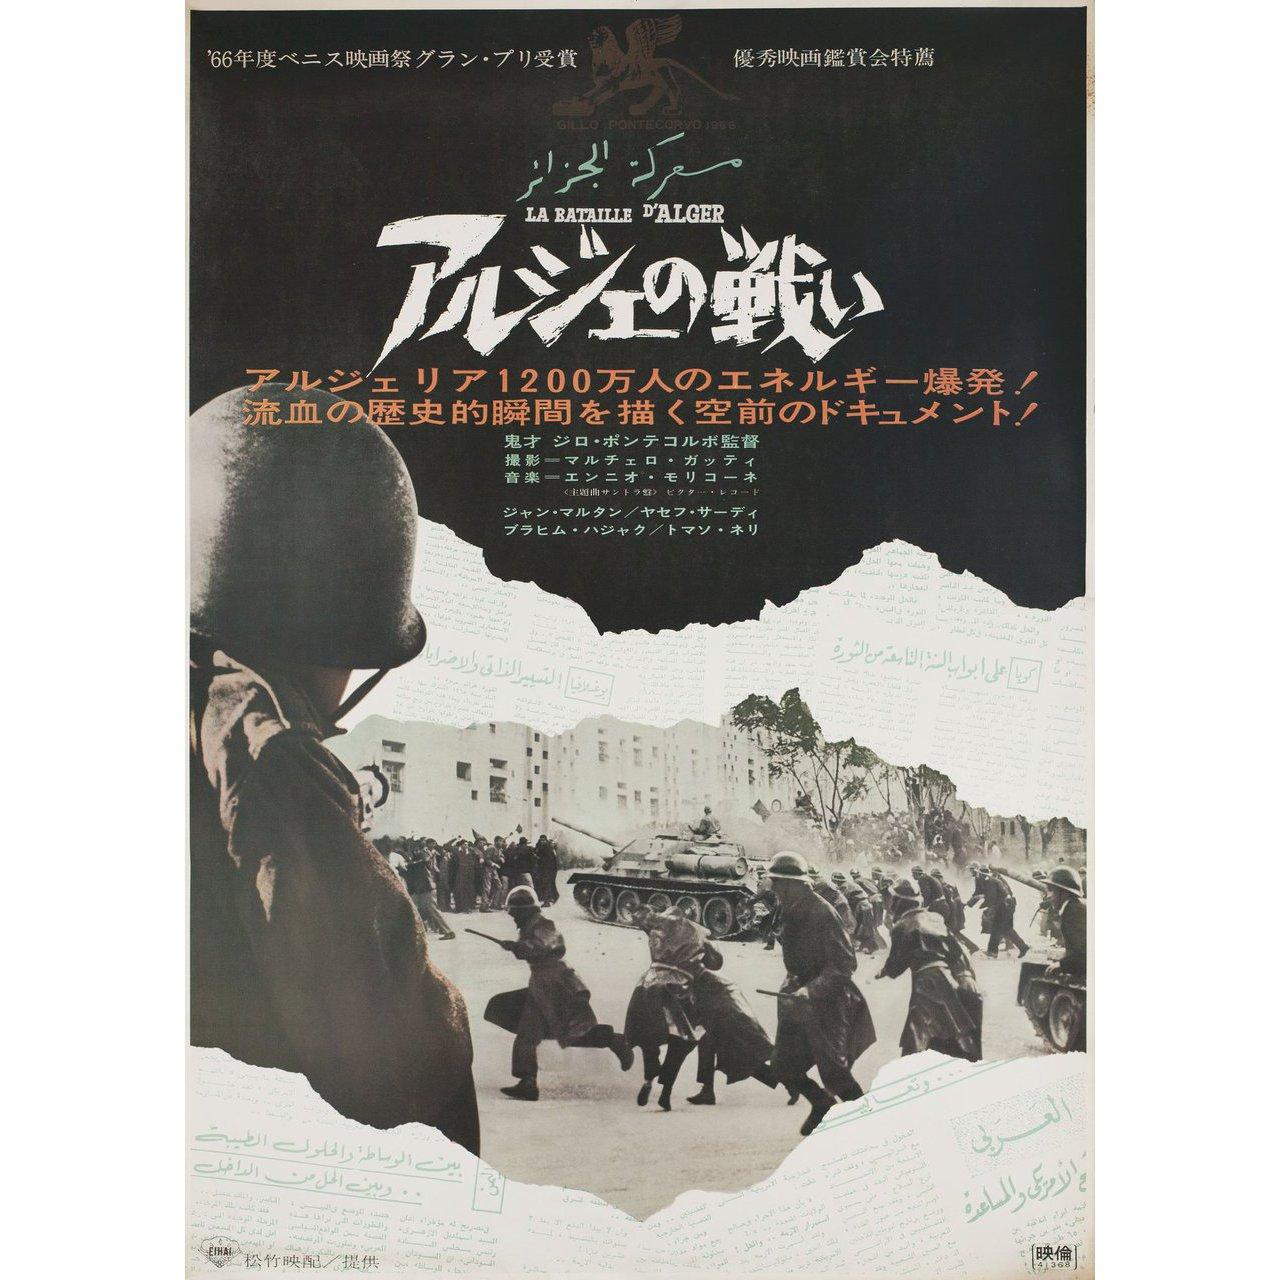 Original 1966 Japanese B2 poster for the film The Battle of Algiers (La battaglia di Algeri) directed by Gillo Pontecorvo with Brahim Hadjadj / Jean Martin / Yacef Saadi / Samia Kerbash. Very Good-Fine condition, rolled. Please note: the size is